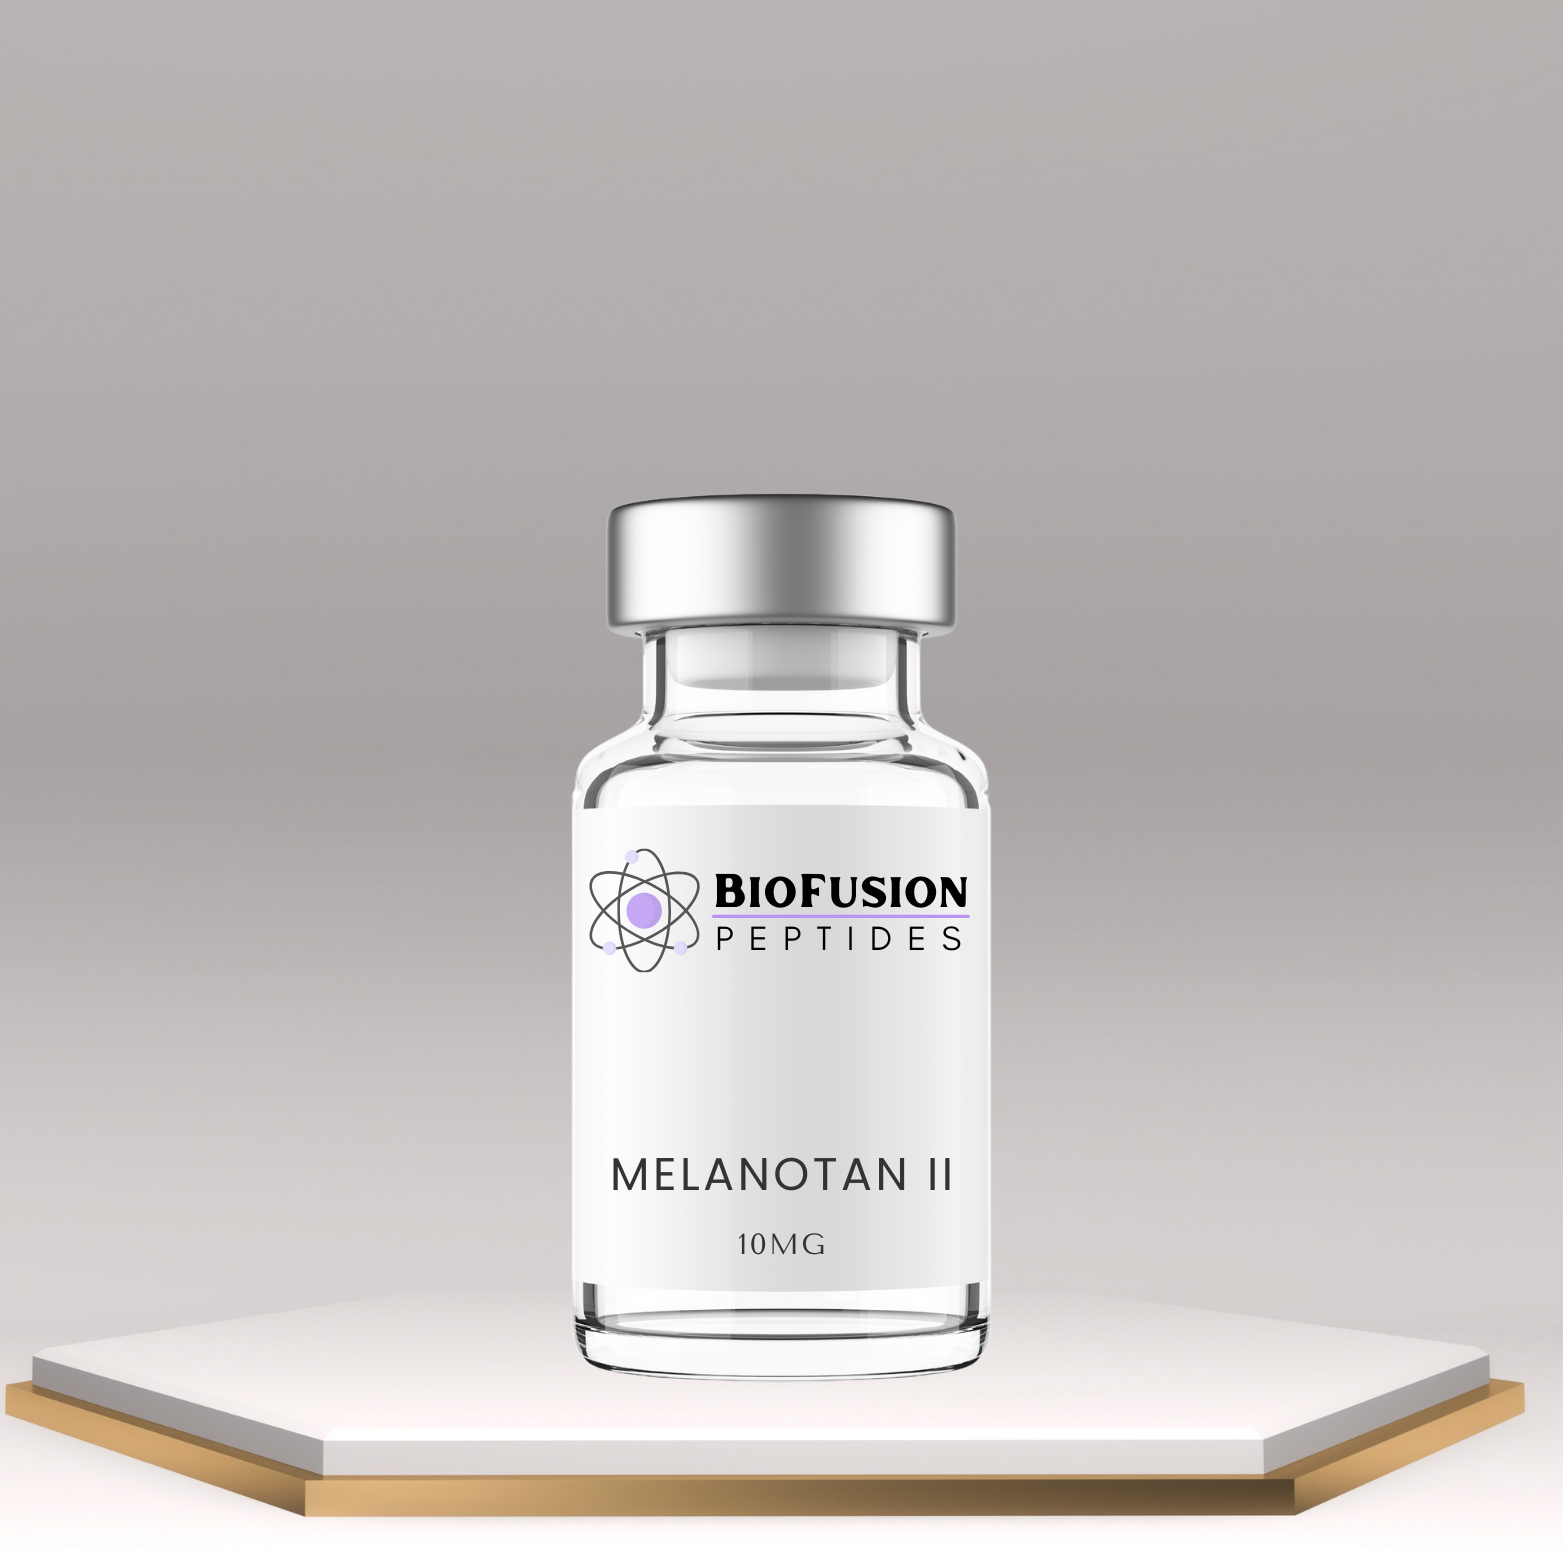 BioFusion Peptides Melanotan II vial